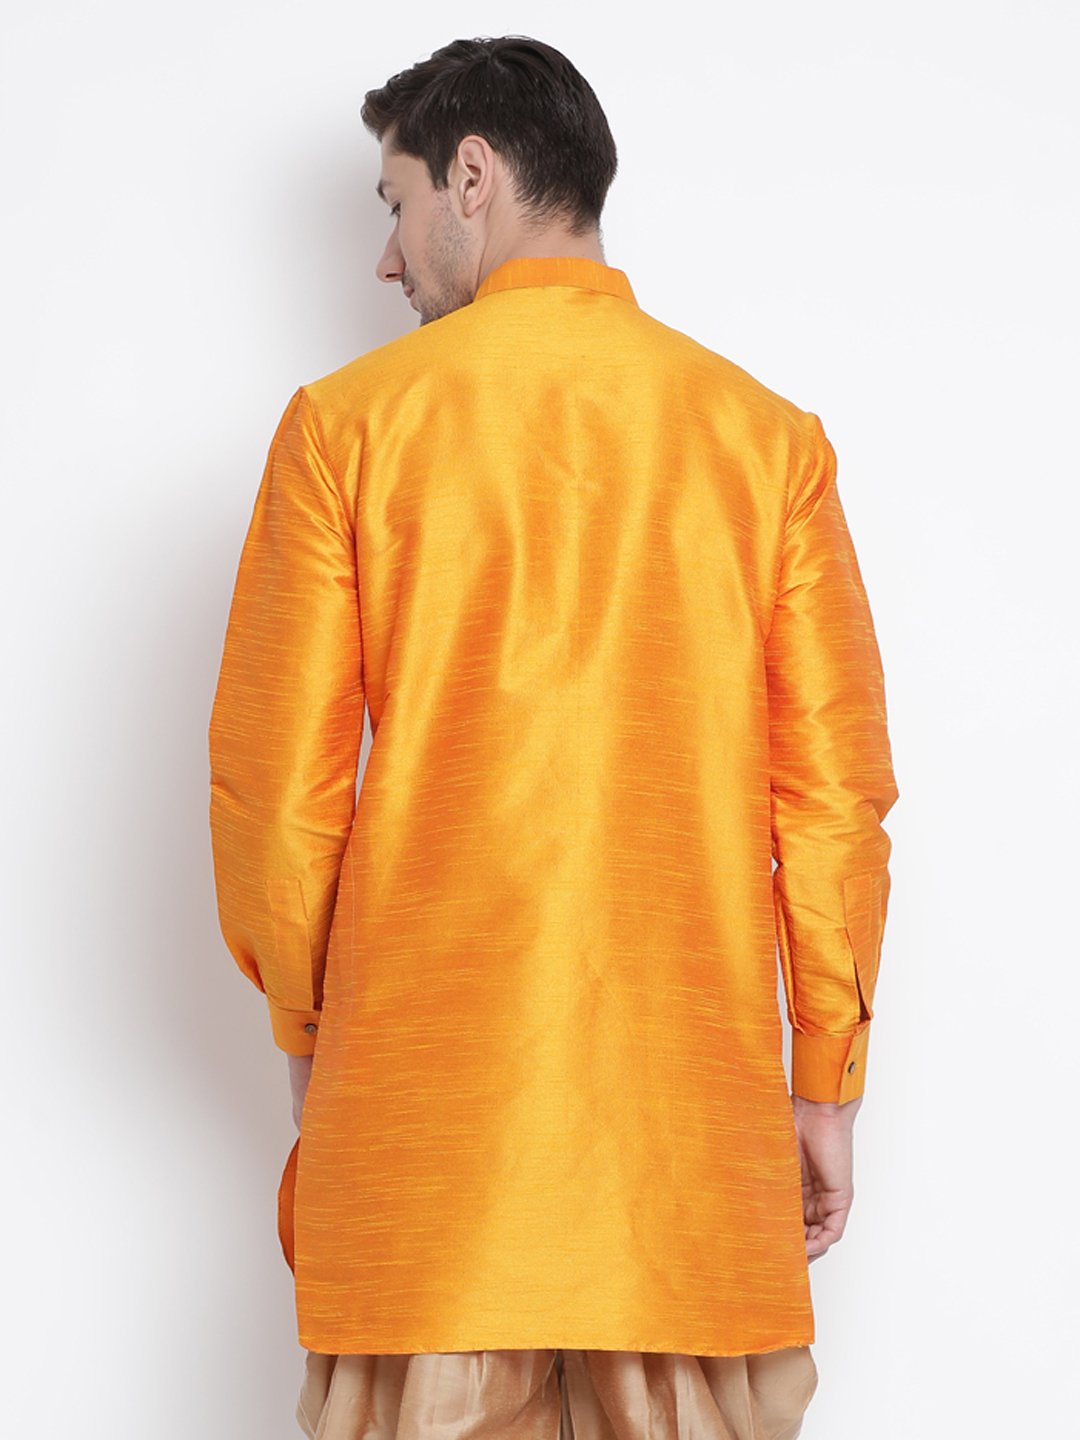 Men's Orange Cotton Silk Blend Kurta